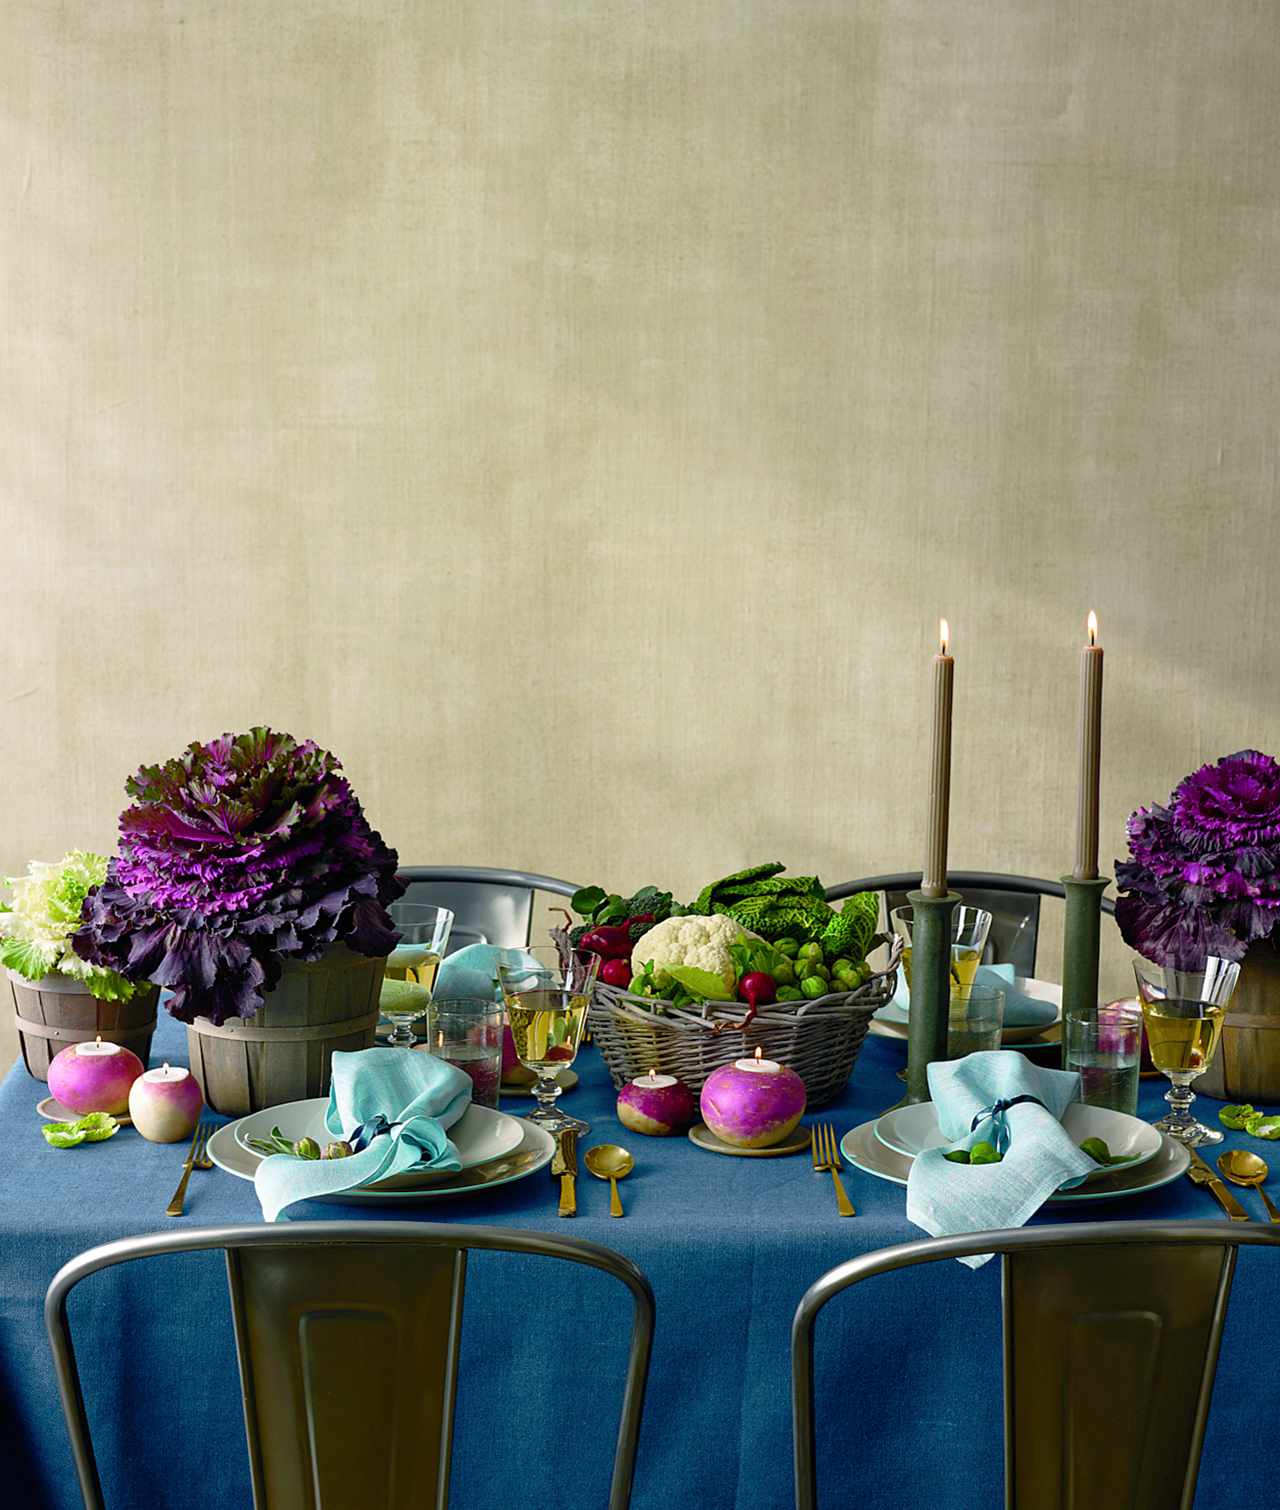 thanksgiving table setting turnip votives